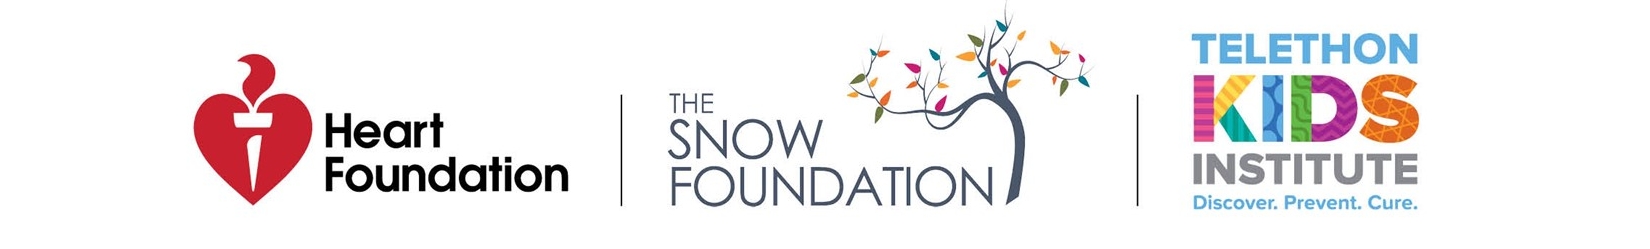 Logos:  Heart Foundation, The Snow Foundation, Telethon Kids Institute